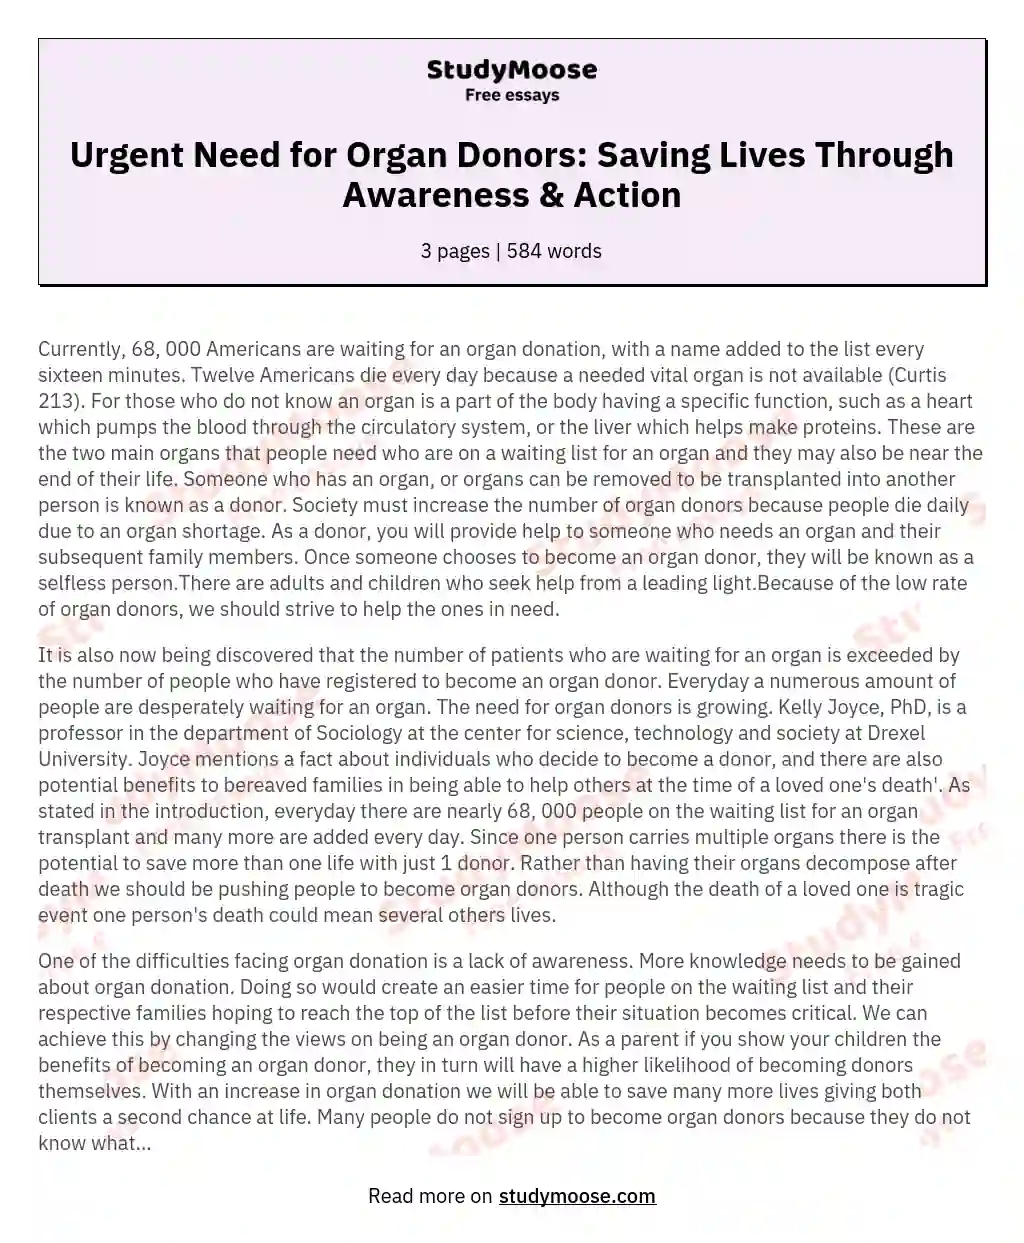 Organ Donation in U.S